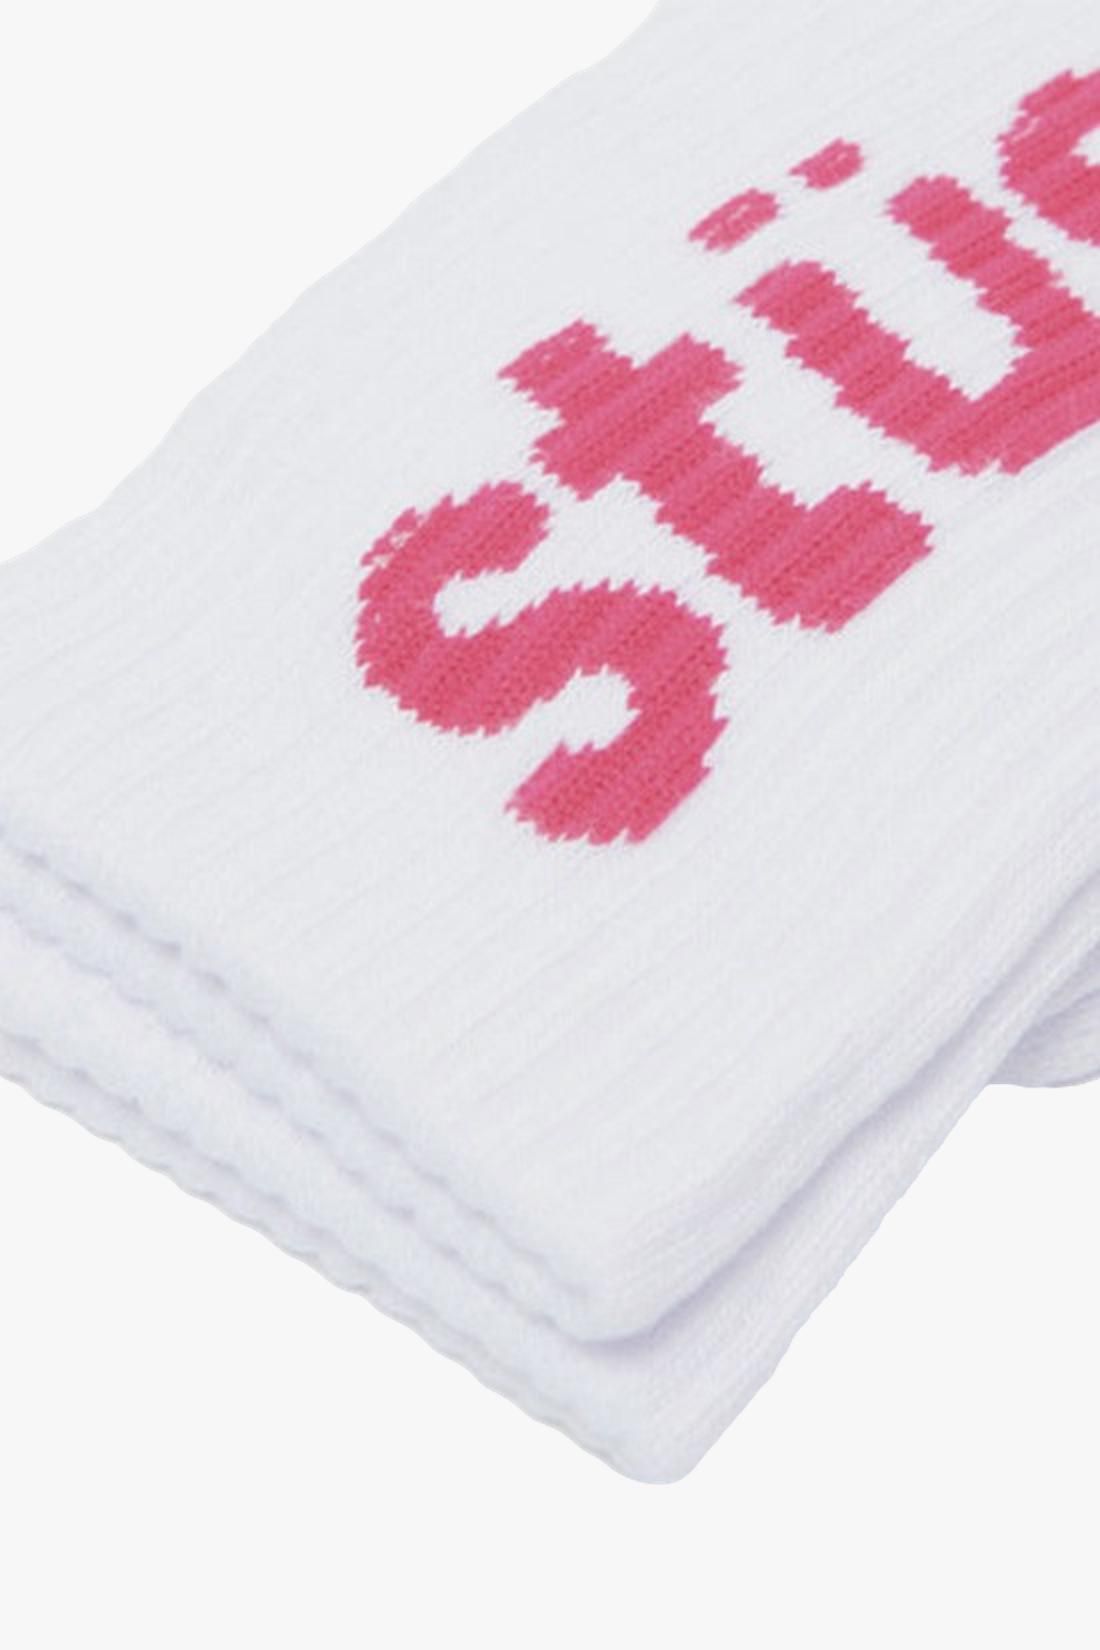 STUSSY / Helvetica jacquard crew socks Hot pink